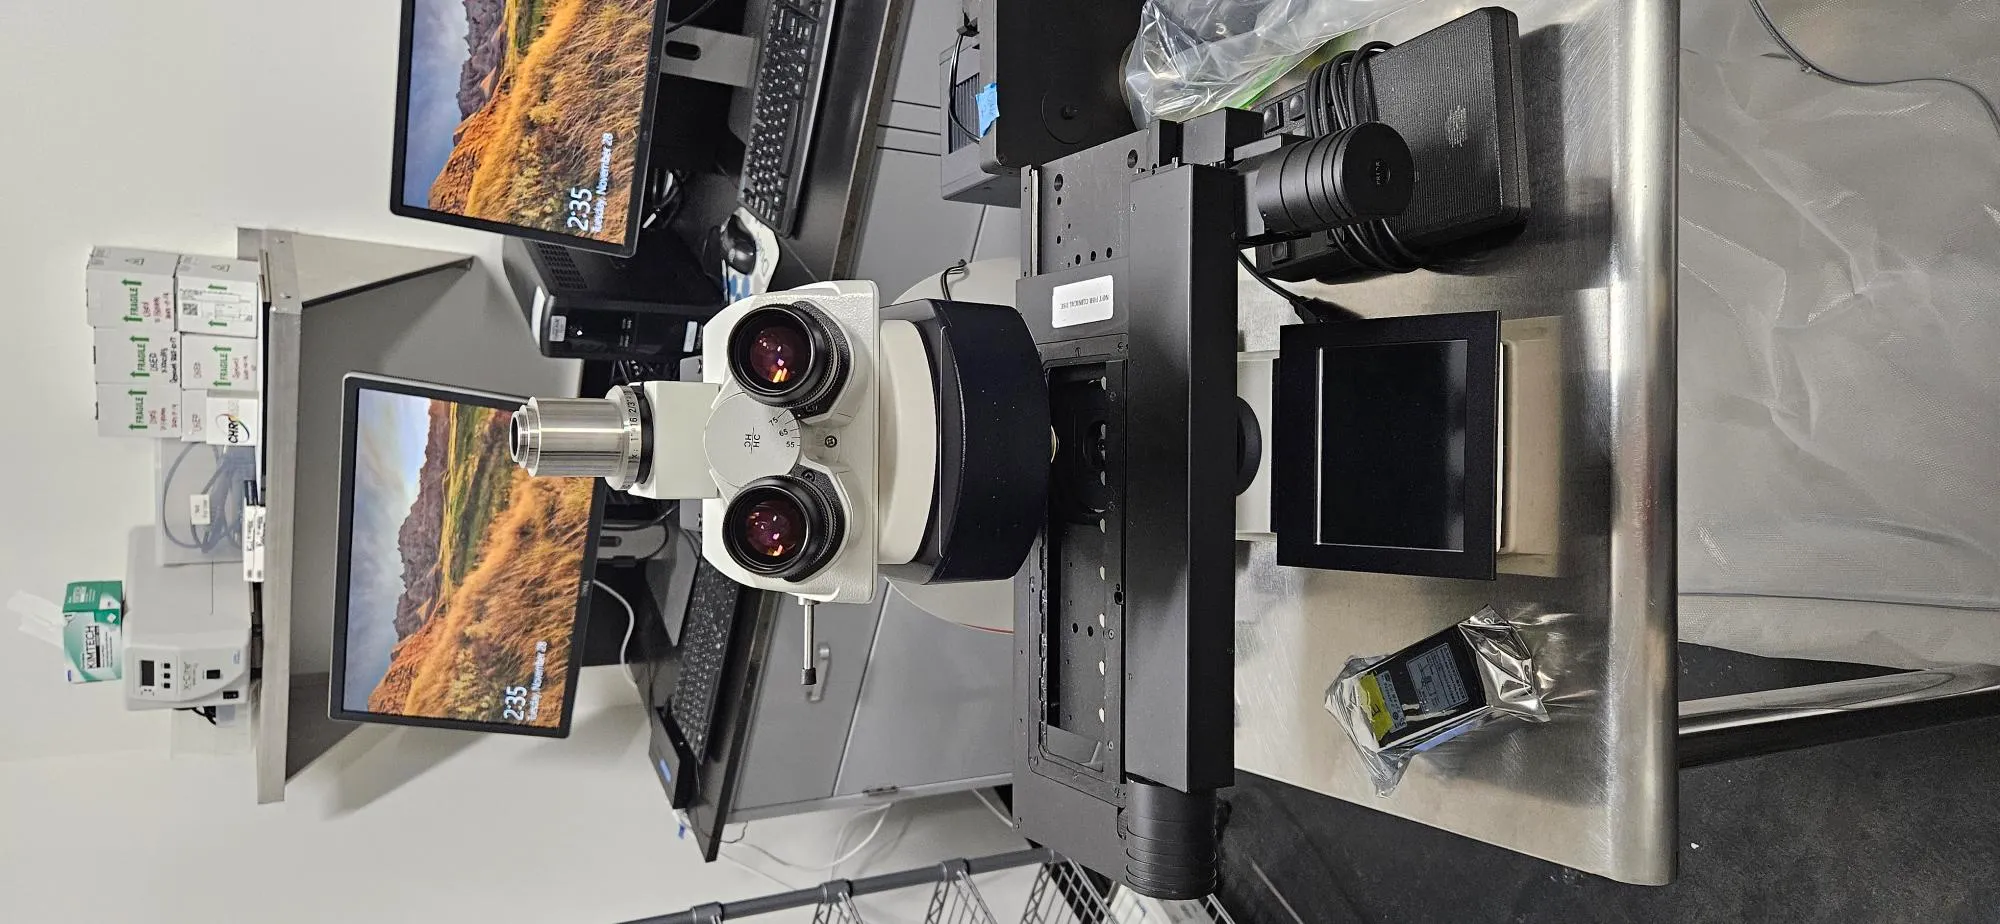 Leica Ariol Microscope